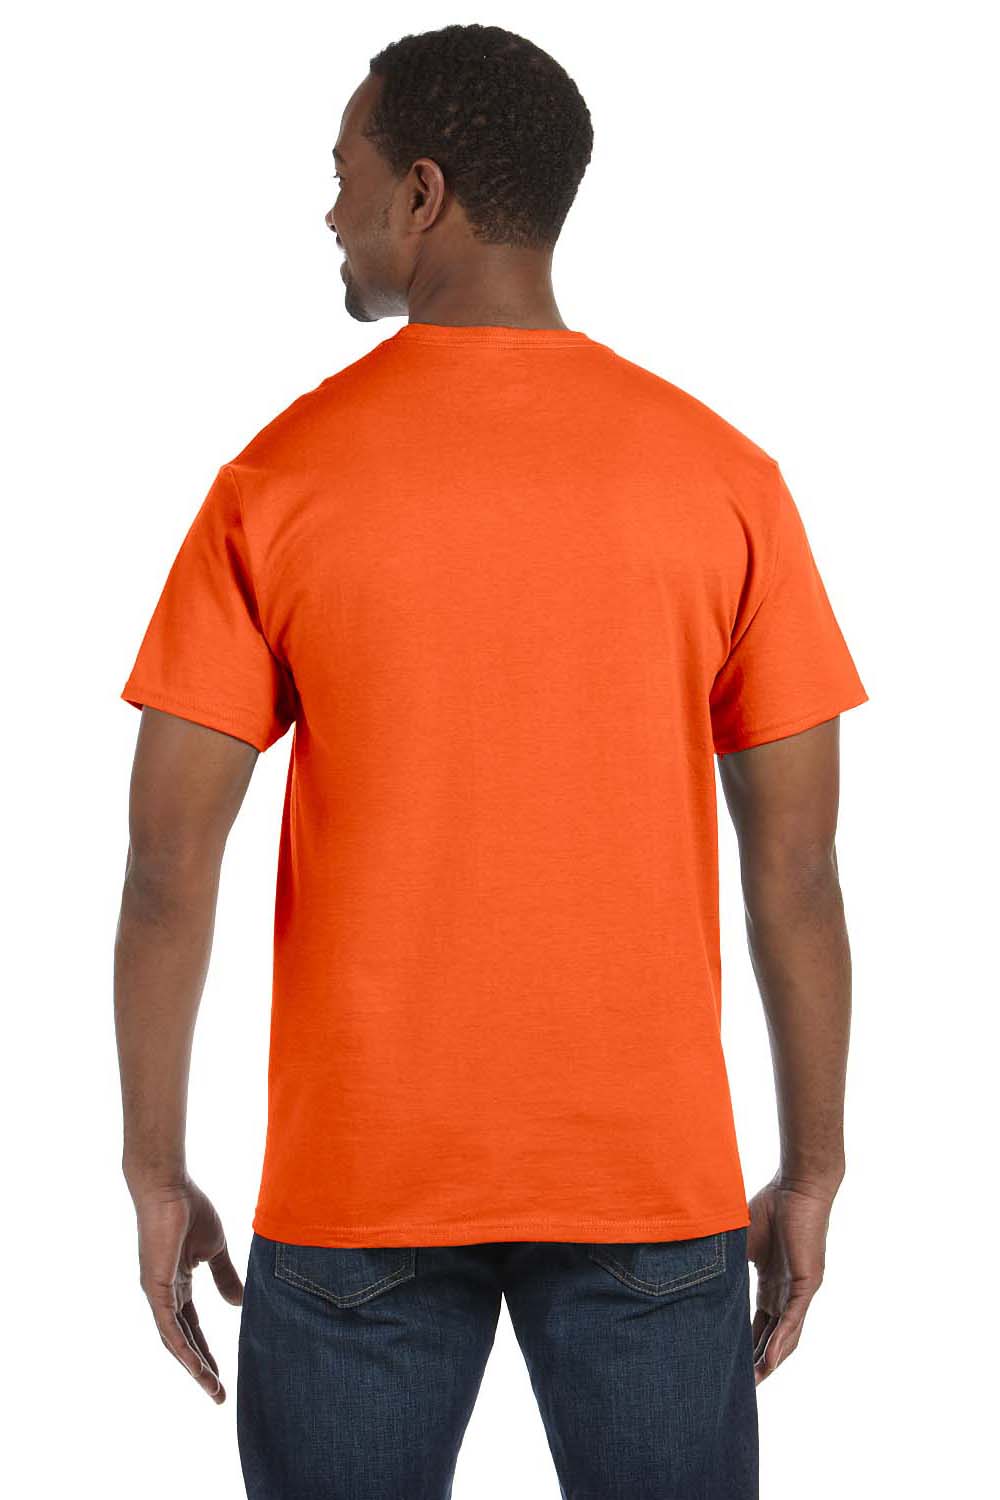 — Sleeve Safety Jerzees Crewneck Moisture 29M/29MR/29MT Short Orange T-Shirt Mens Dri-Power Wicking